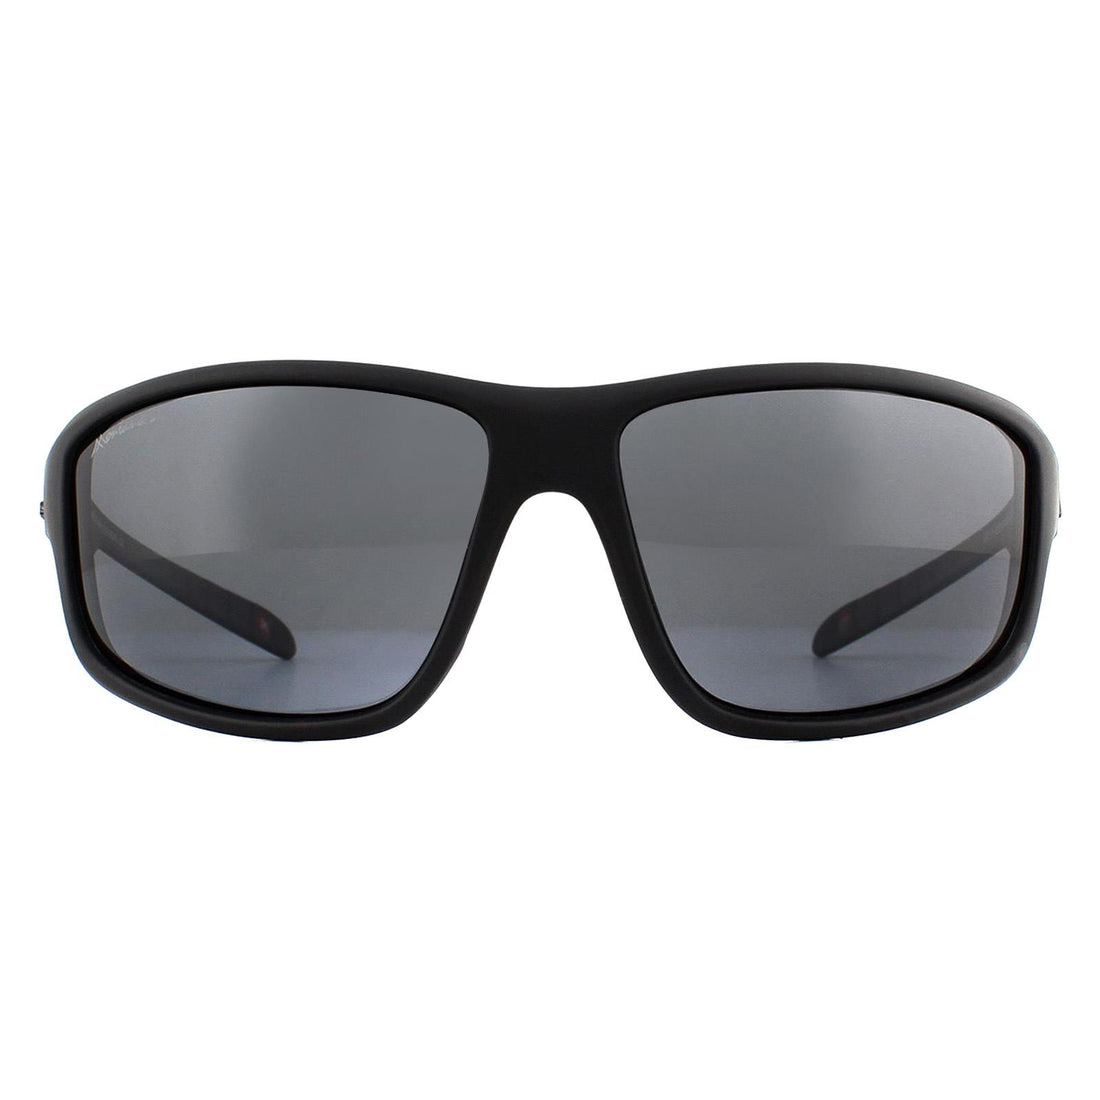 Montana SP313 Sunglasses Black Rubber Smoke Polarized